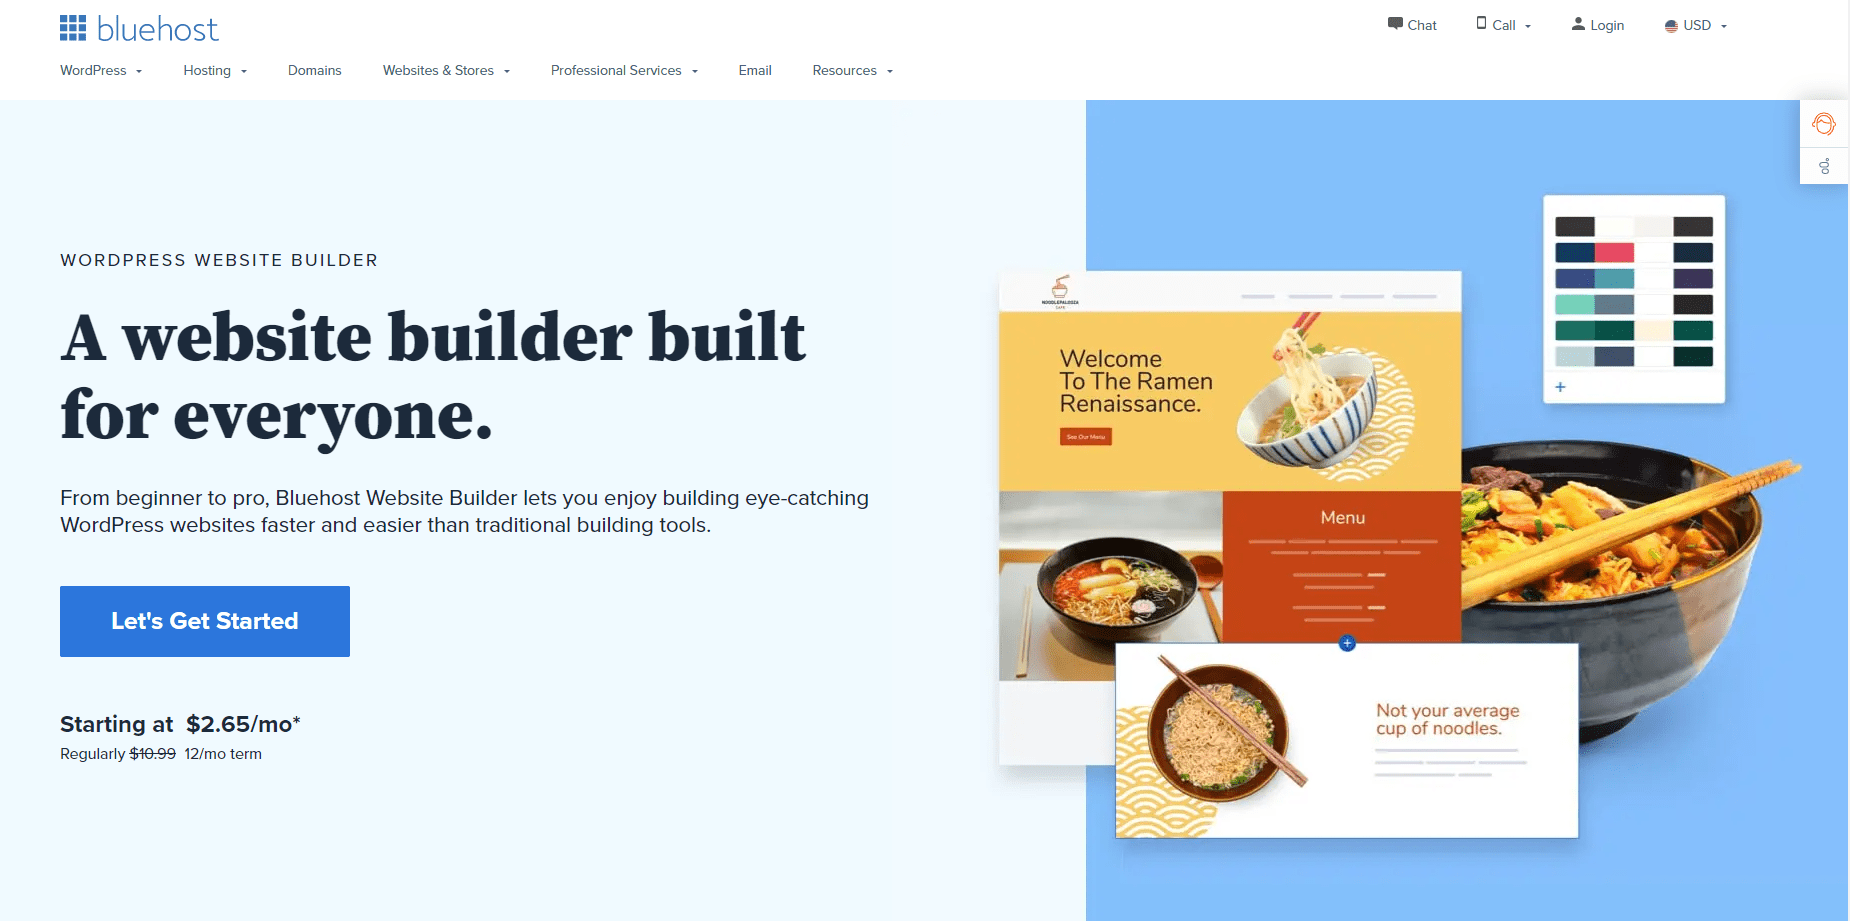 Bluehost Website Builder - HostGator Alternatives